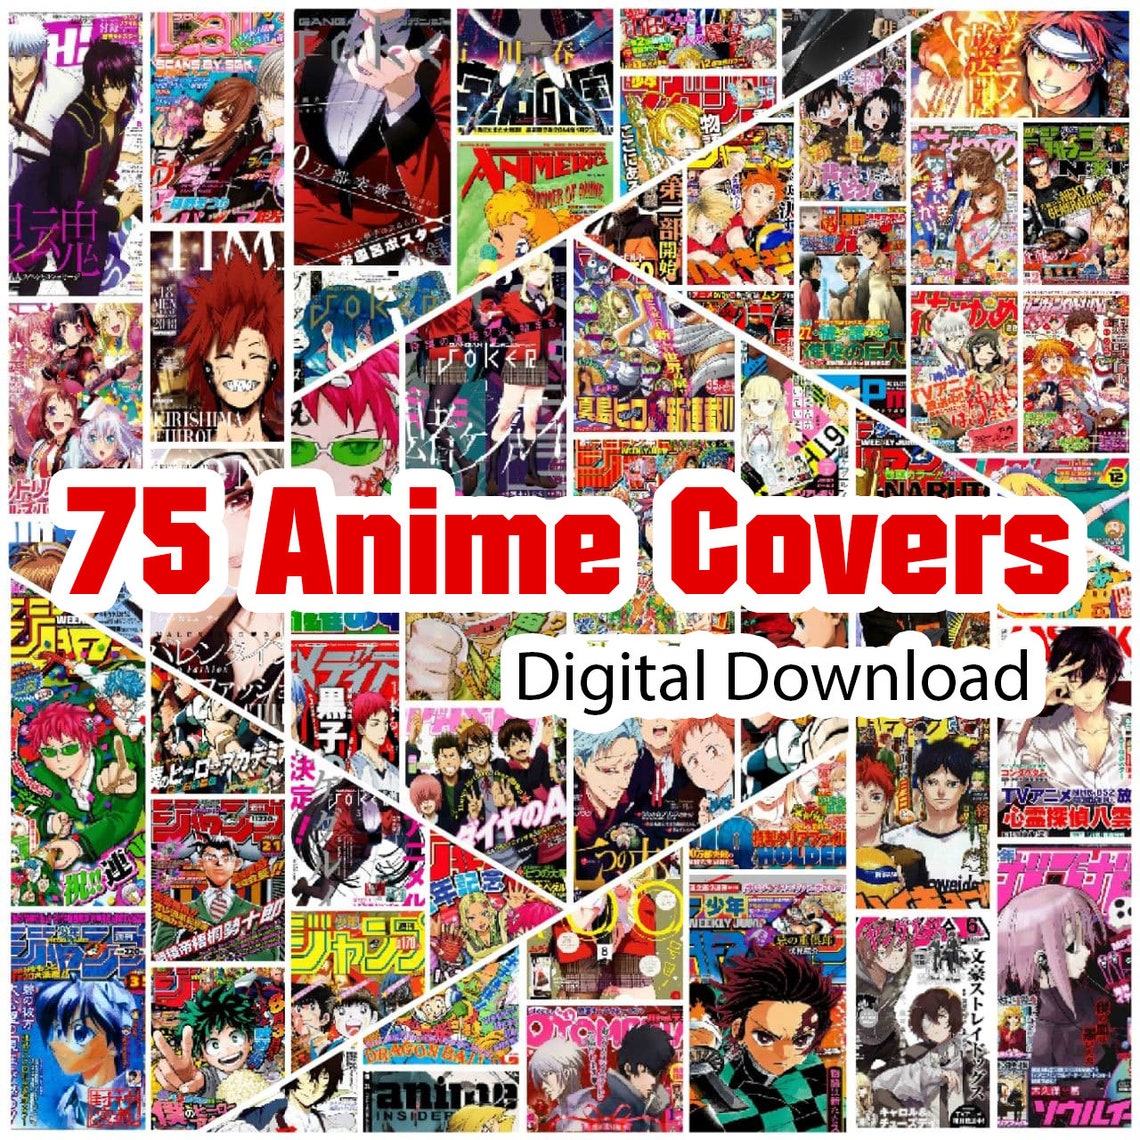 Anime Magazine Covers Aesthetic Wall Collage Kit Pcs Etsy